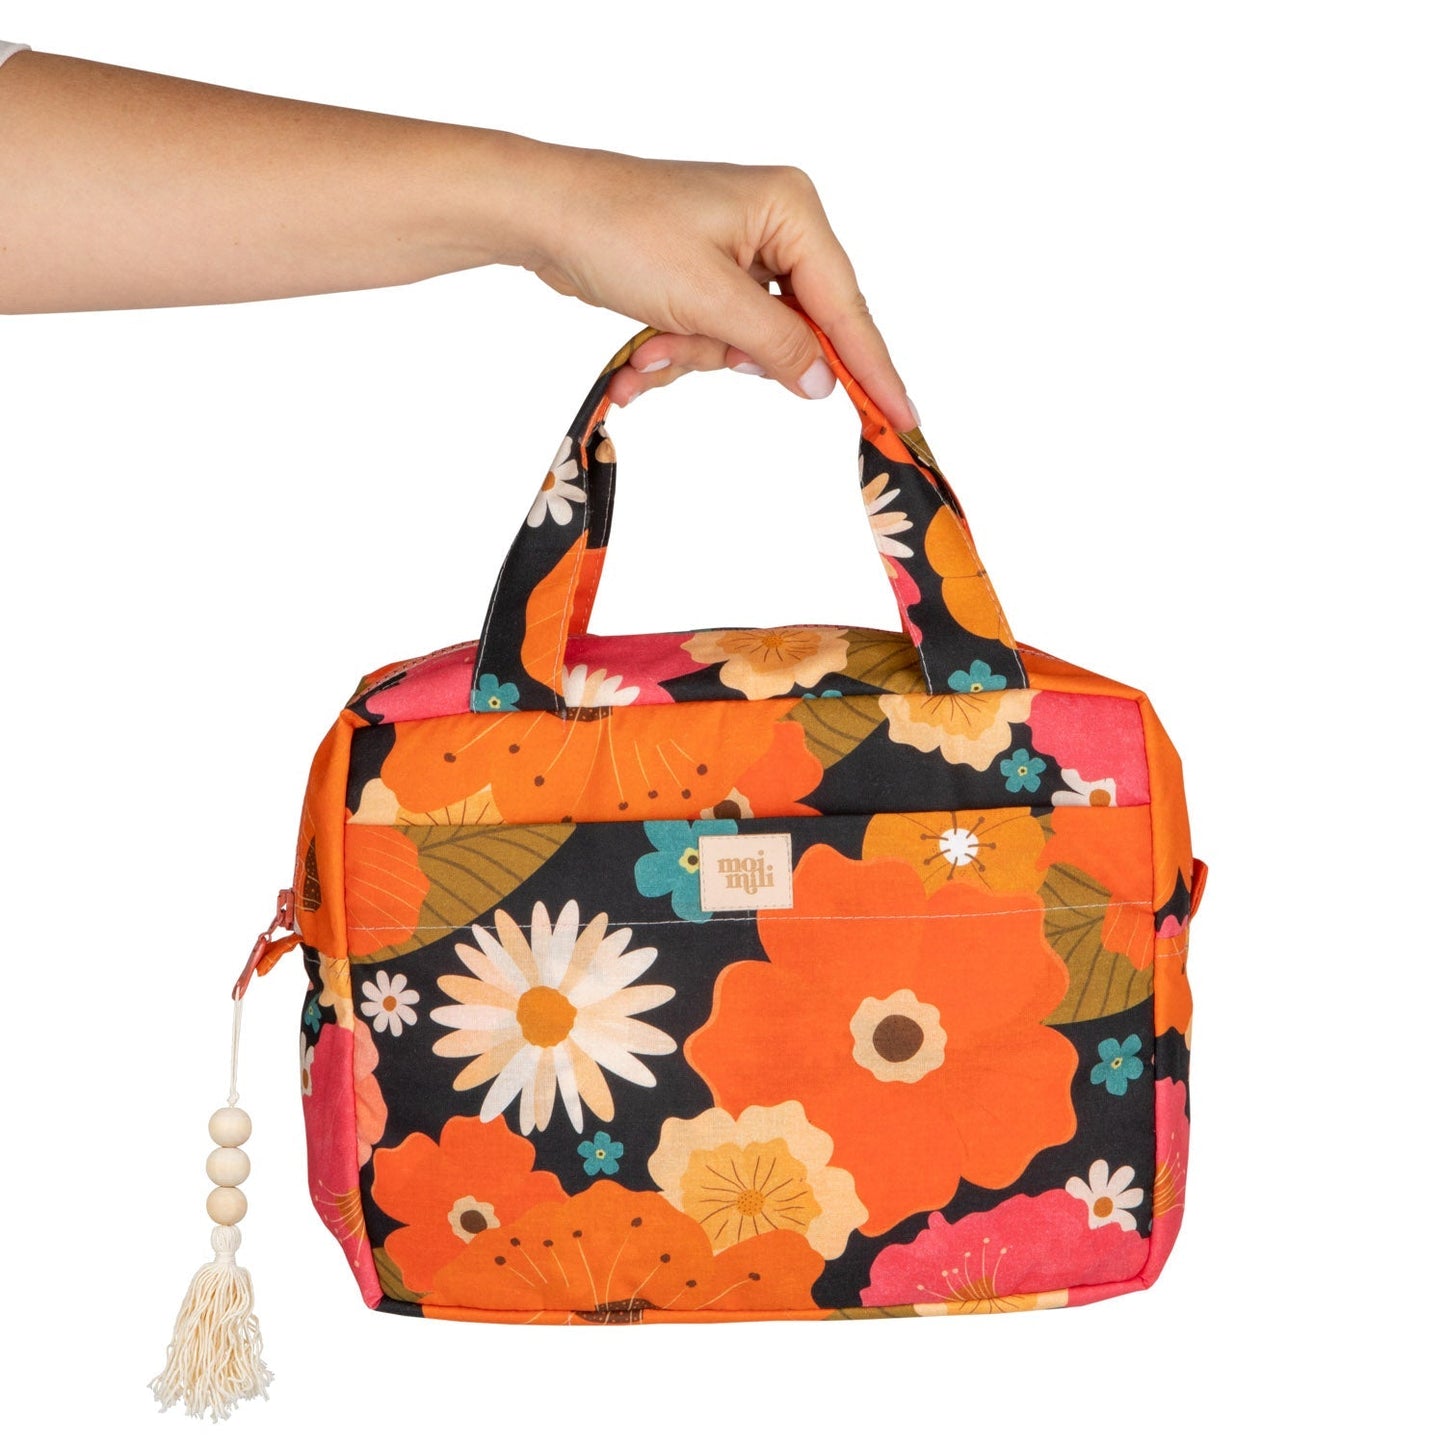 "Picnic with Flowers" Makeup bag Big size